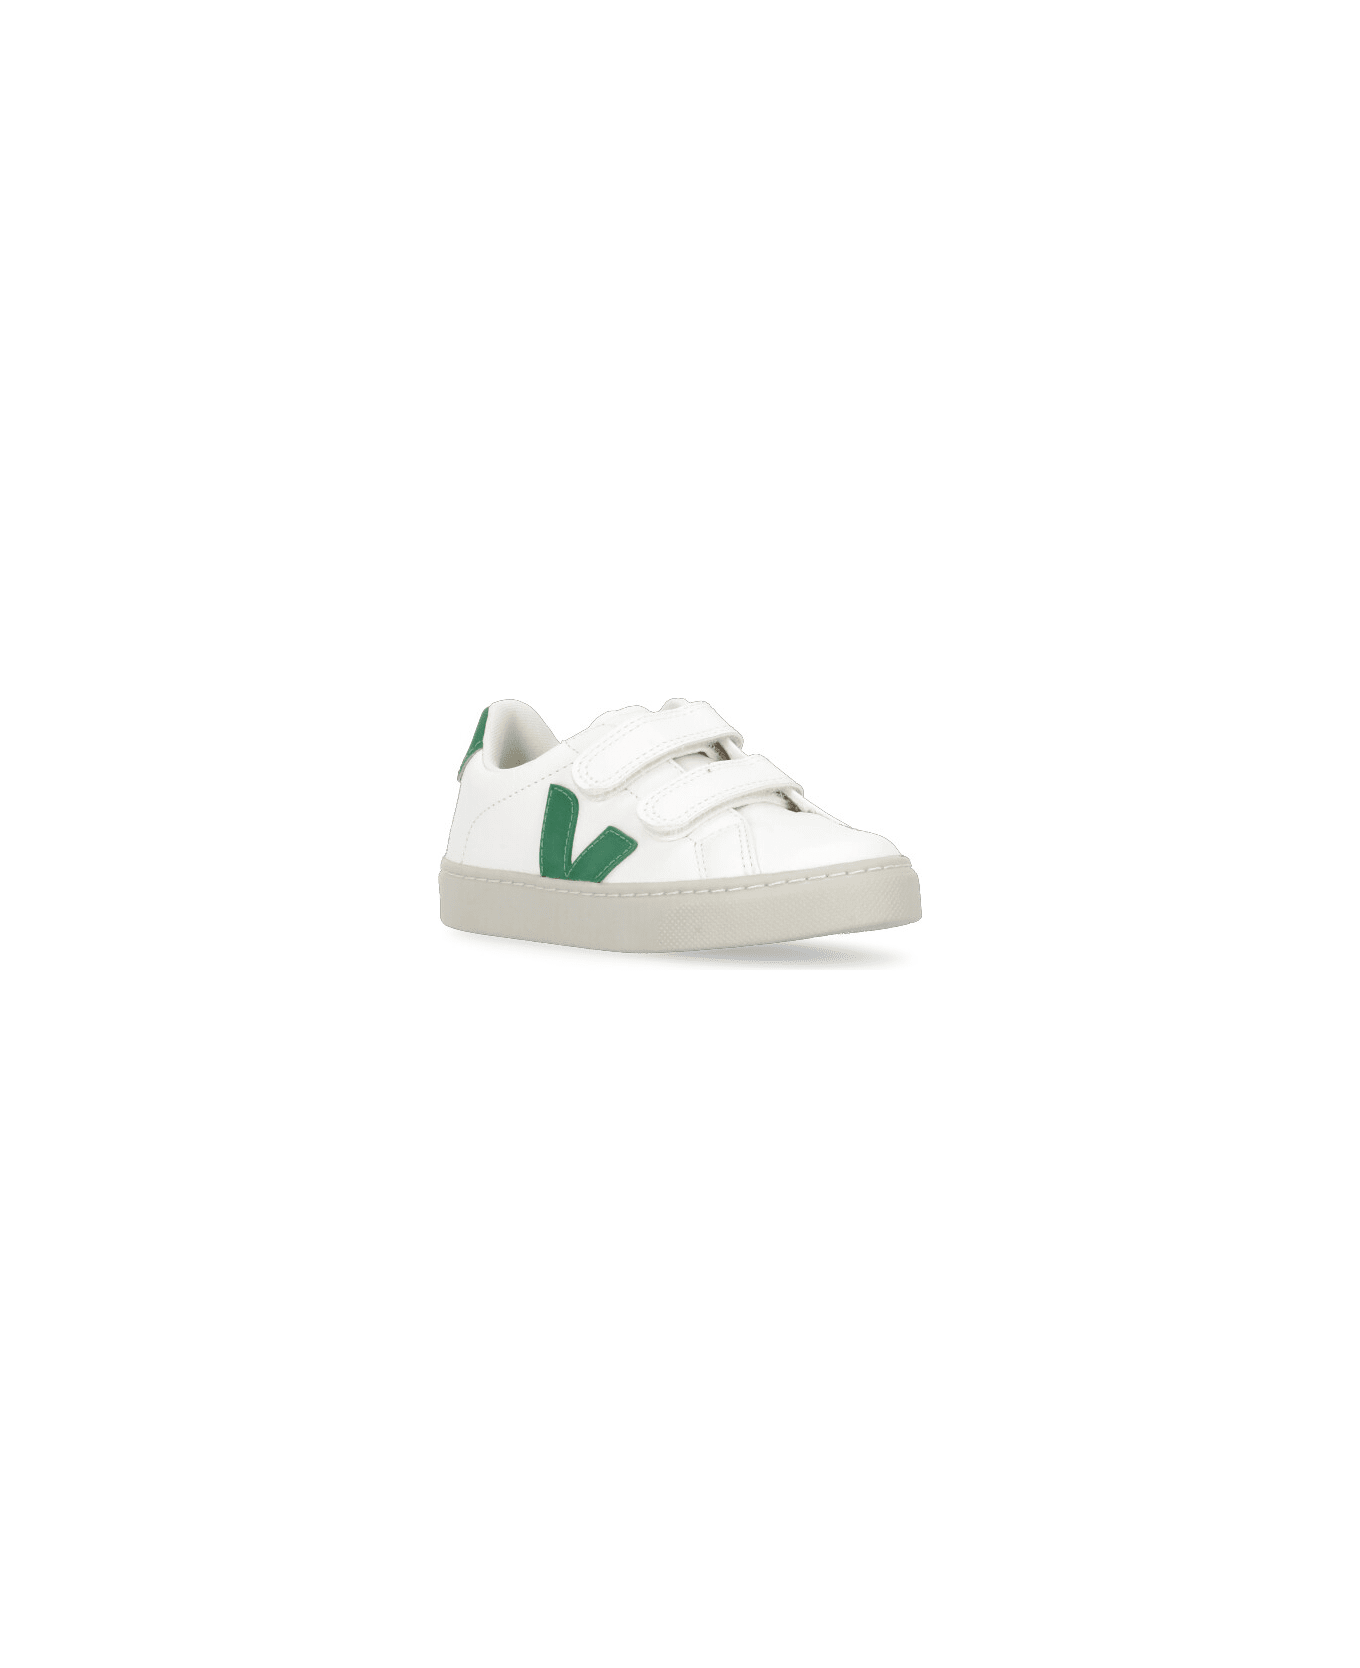 Veja Esplar Sneakers - Green シューズ